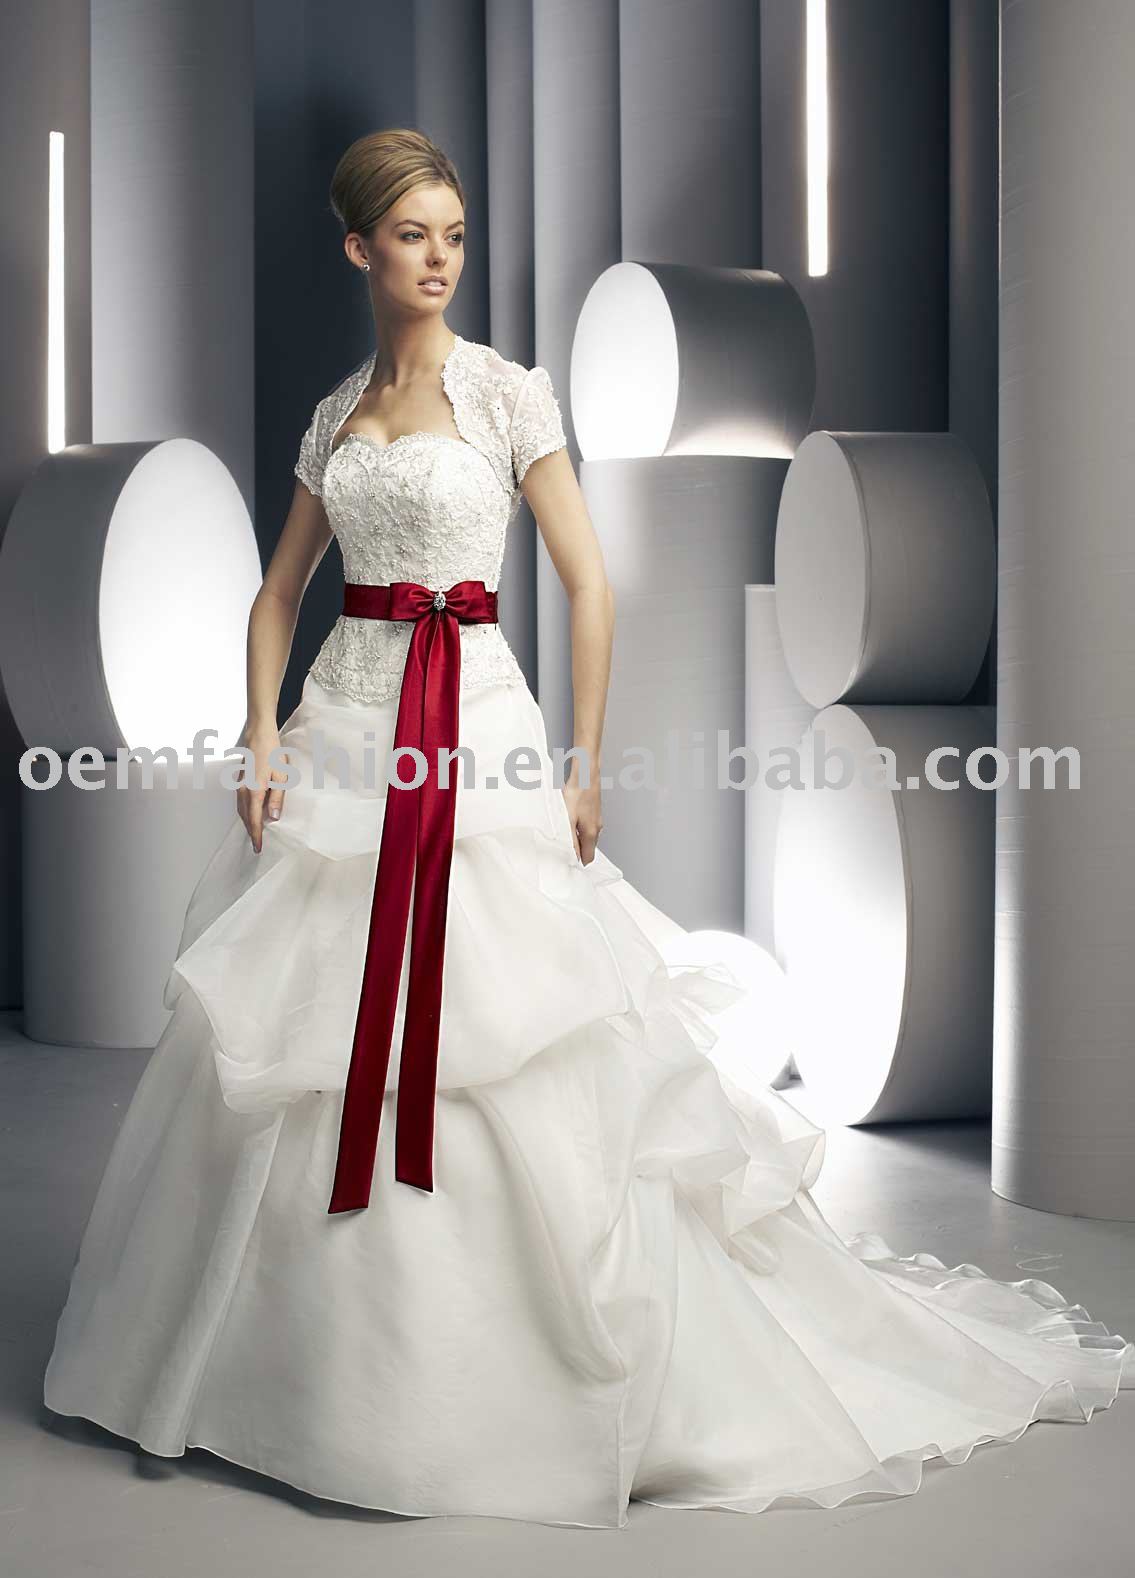 2010 Best Selling Wedding Dress HL-BWD04. US$ 148.45 - US$ 148.45/piece